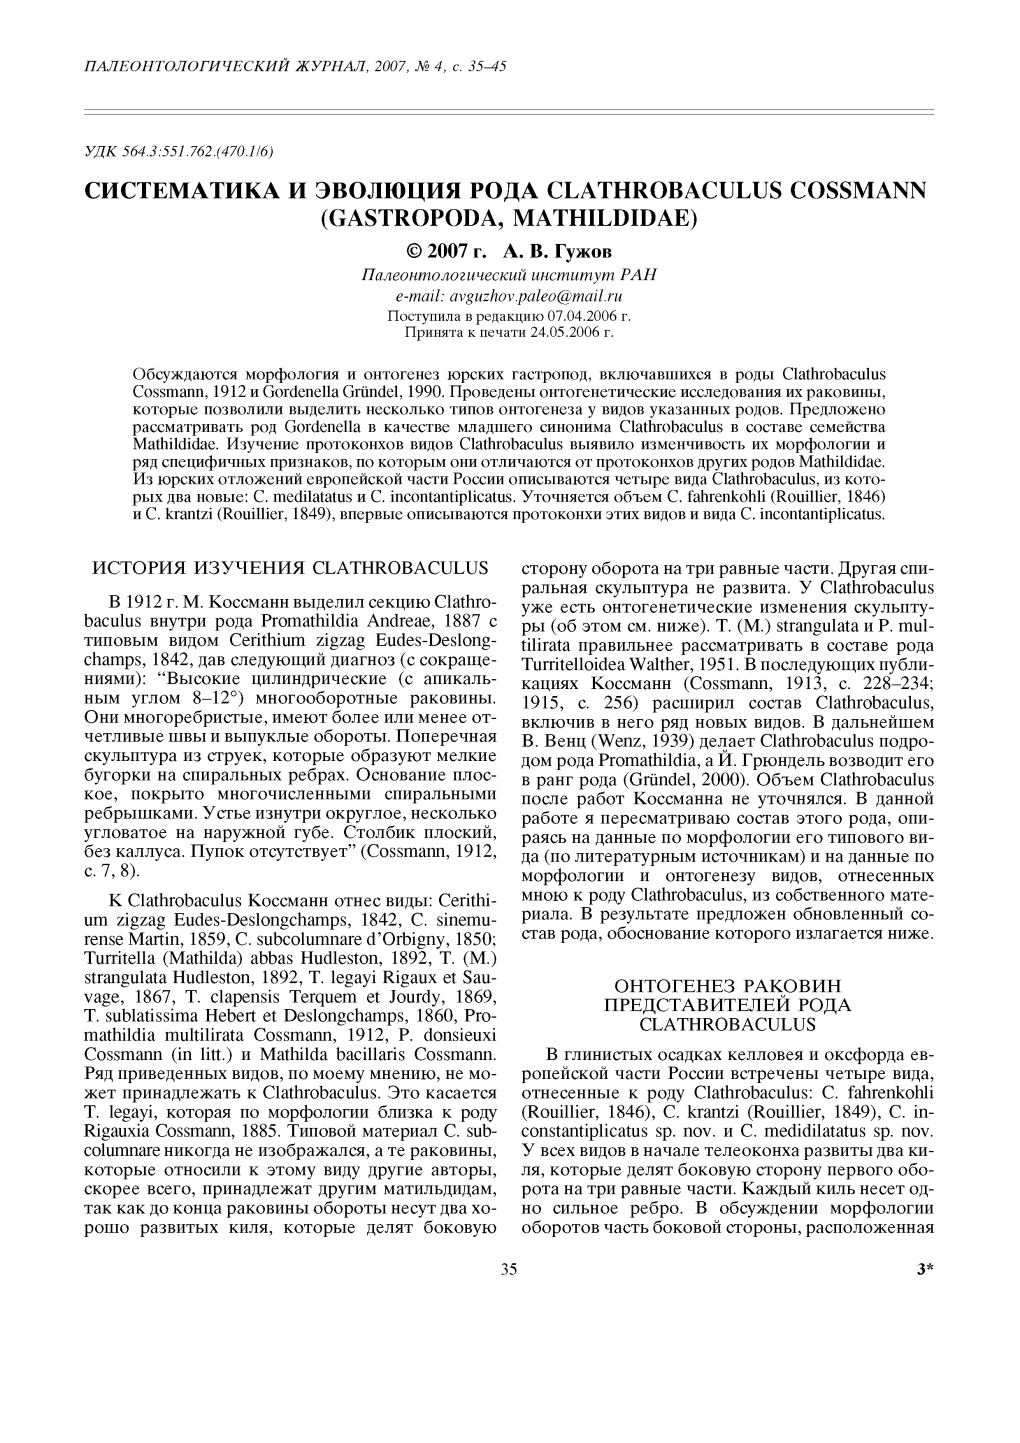 Систематика И Эволюция Рода Clathrobaculus Cossmann (Gastropoda, Mathildidae) © 2007 Г